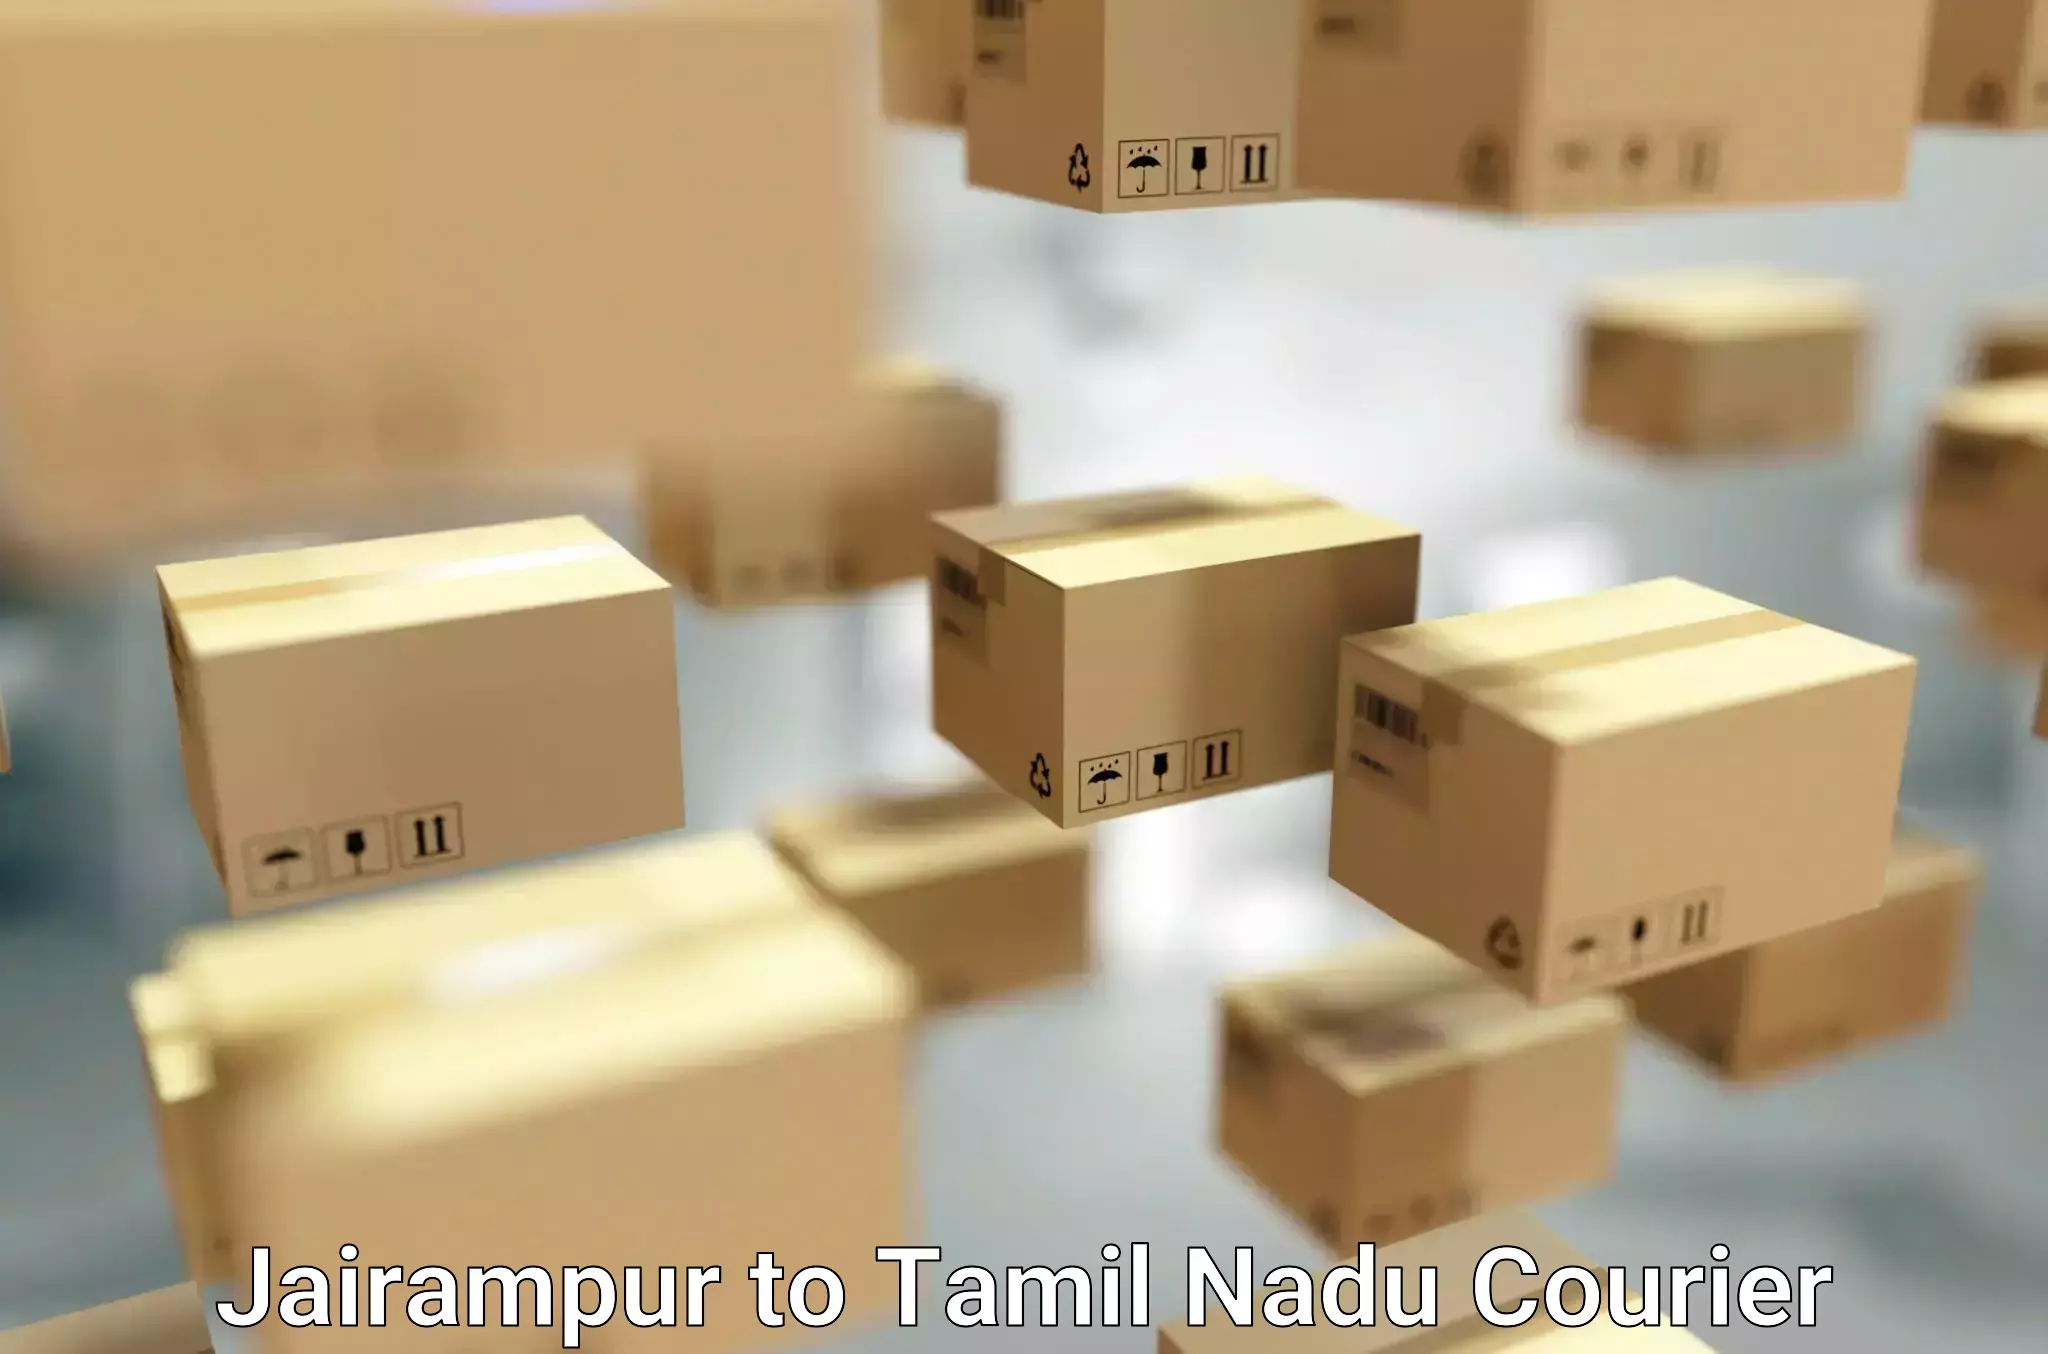 Hassle-free relocation Jairampur to Tamil Nadu